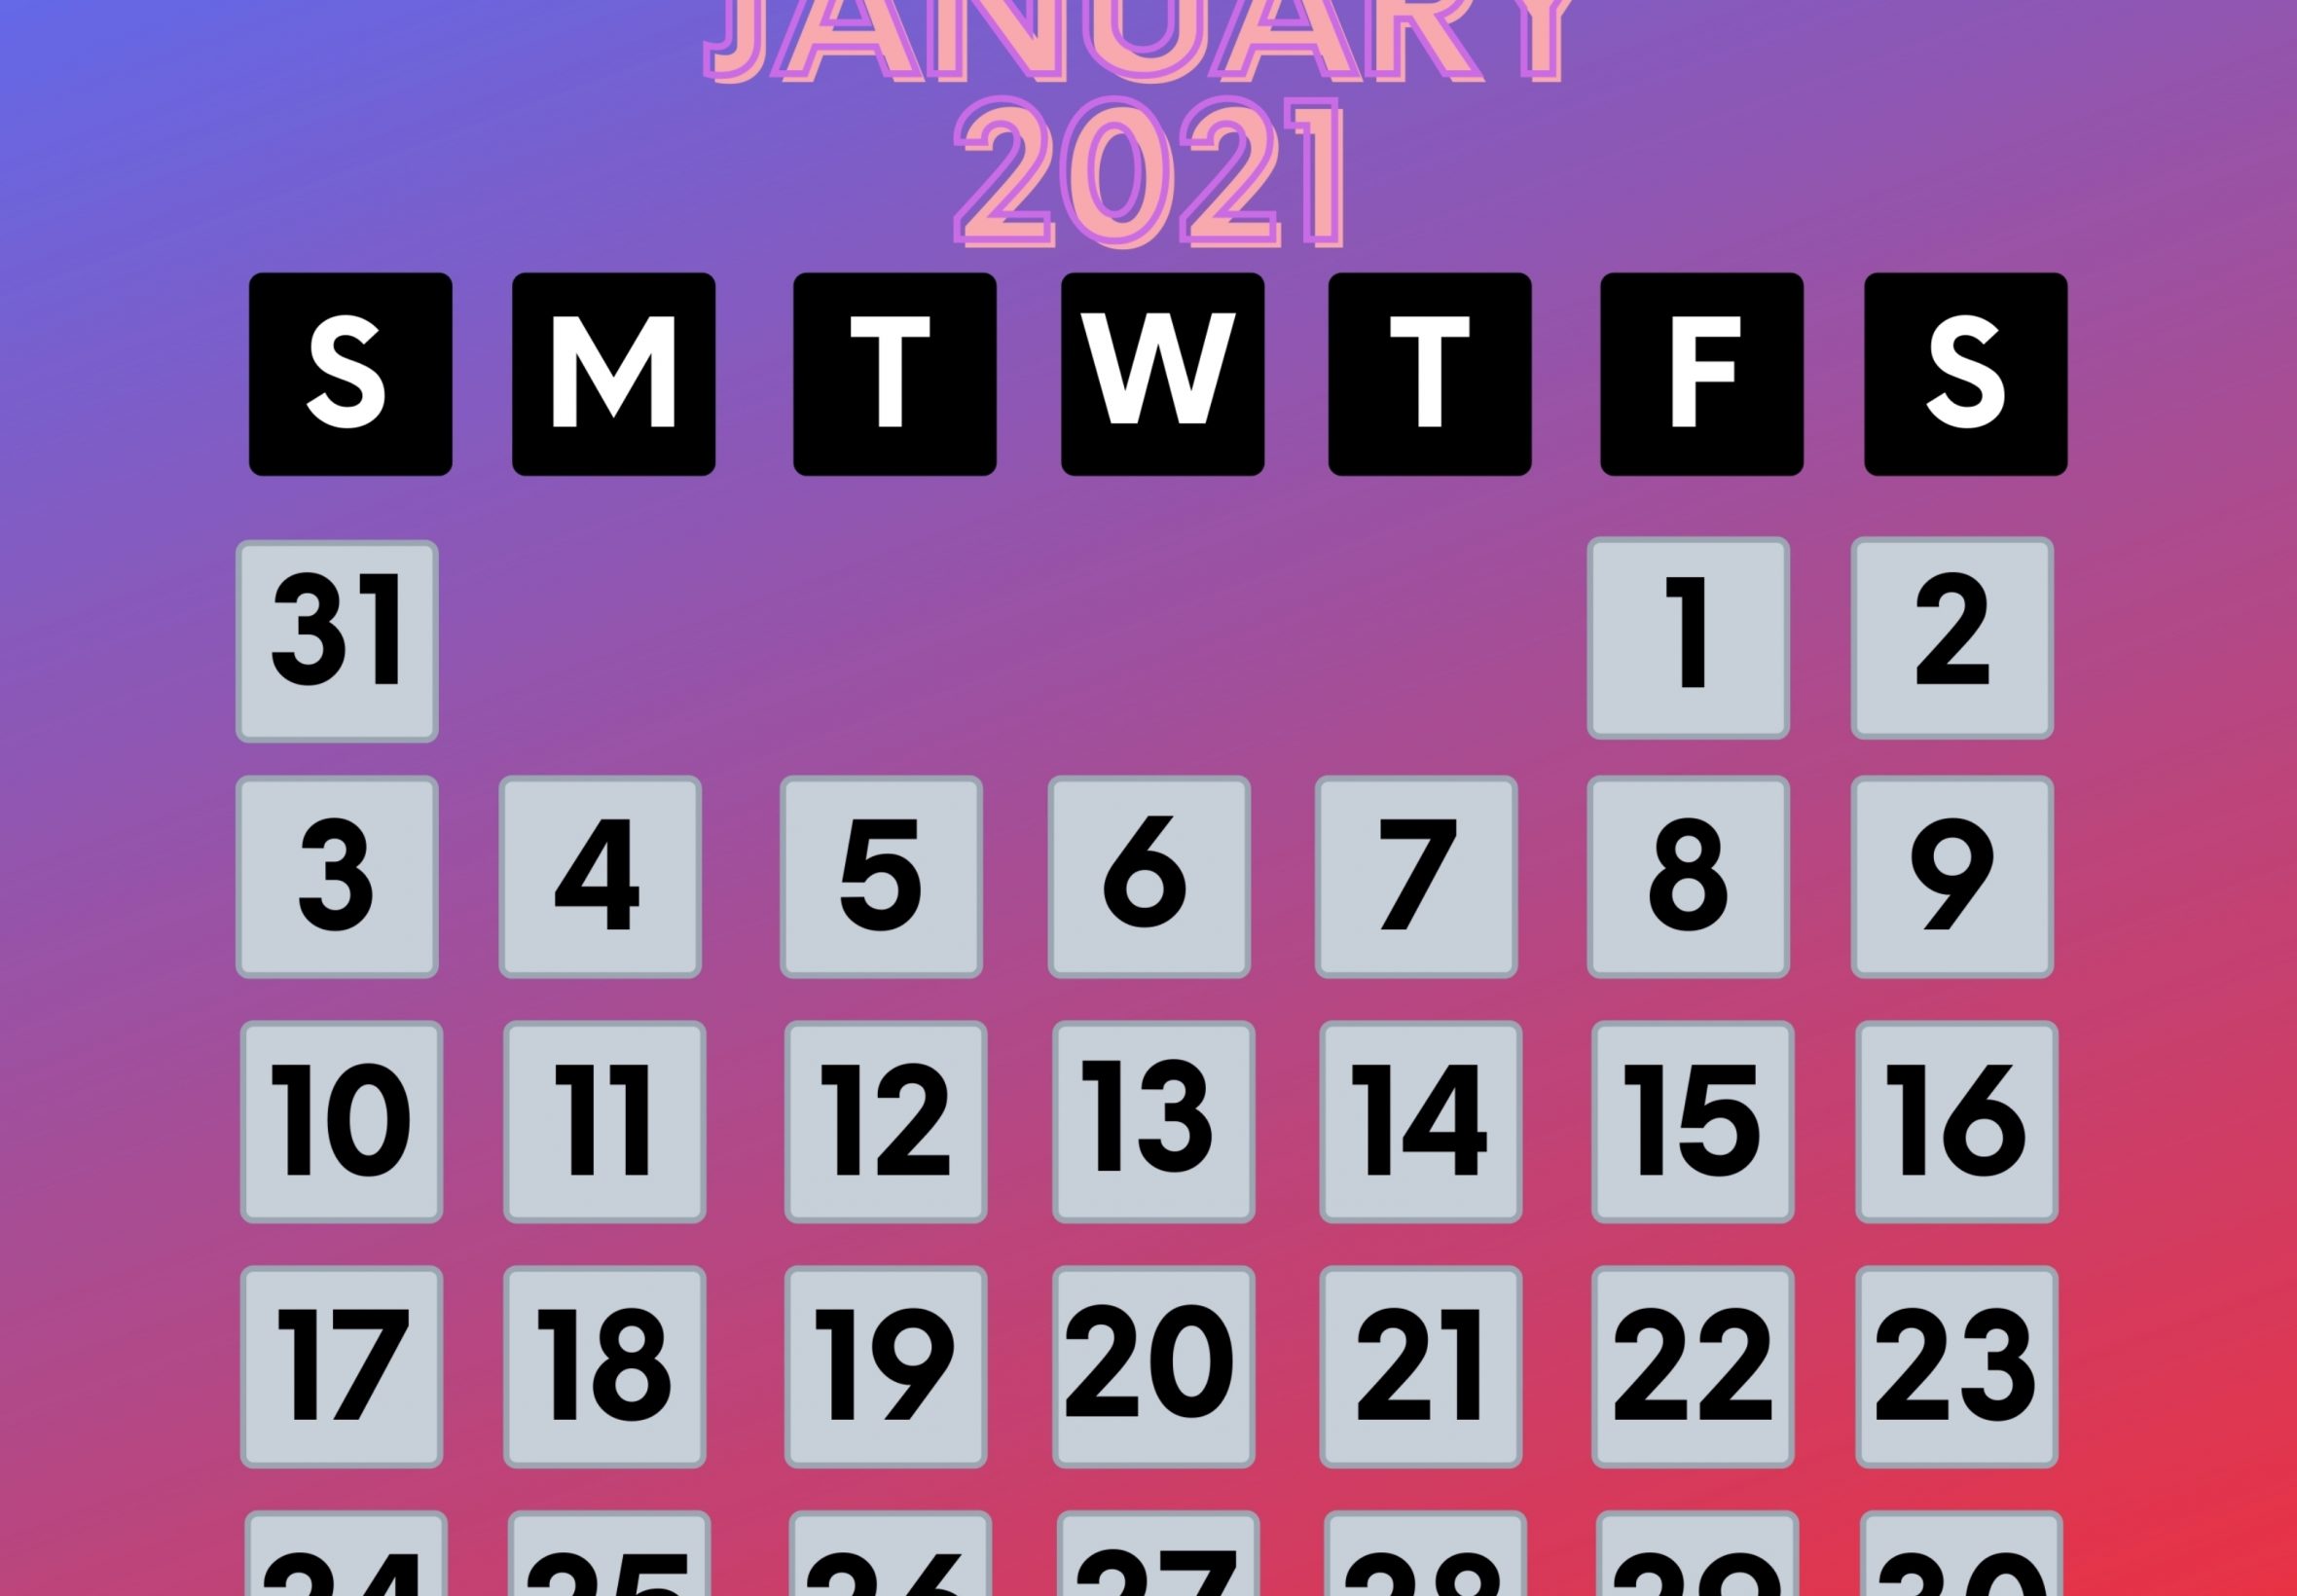 2360x1640 iPad Air wallpaper 4k January 2021 Calendar iPad Wallpaper 2360x1640 pixels resolution